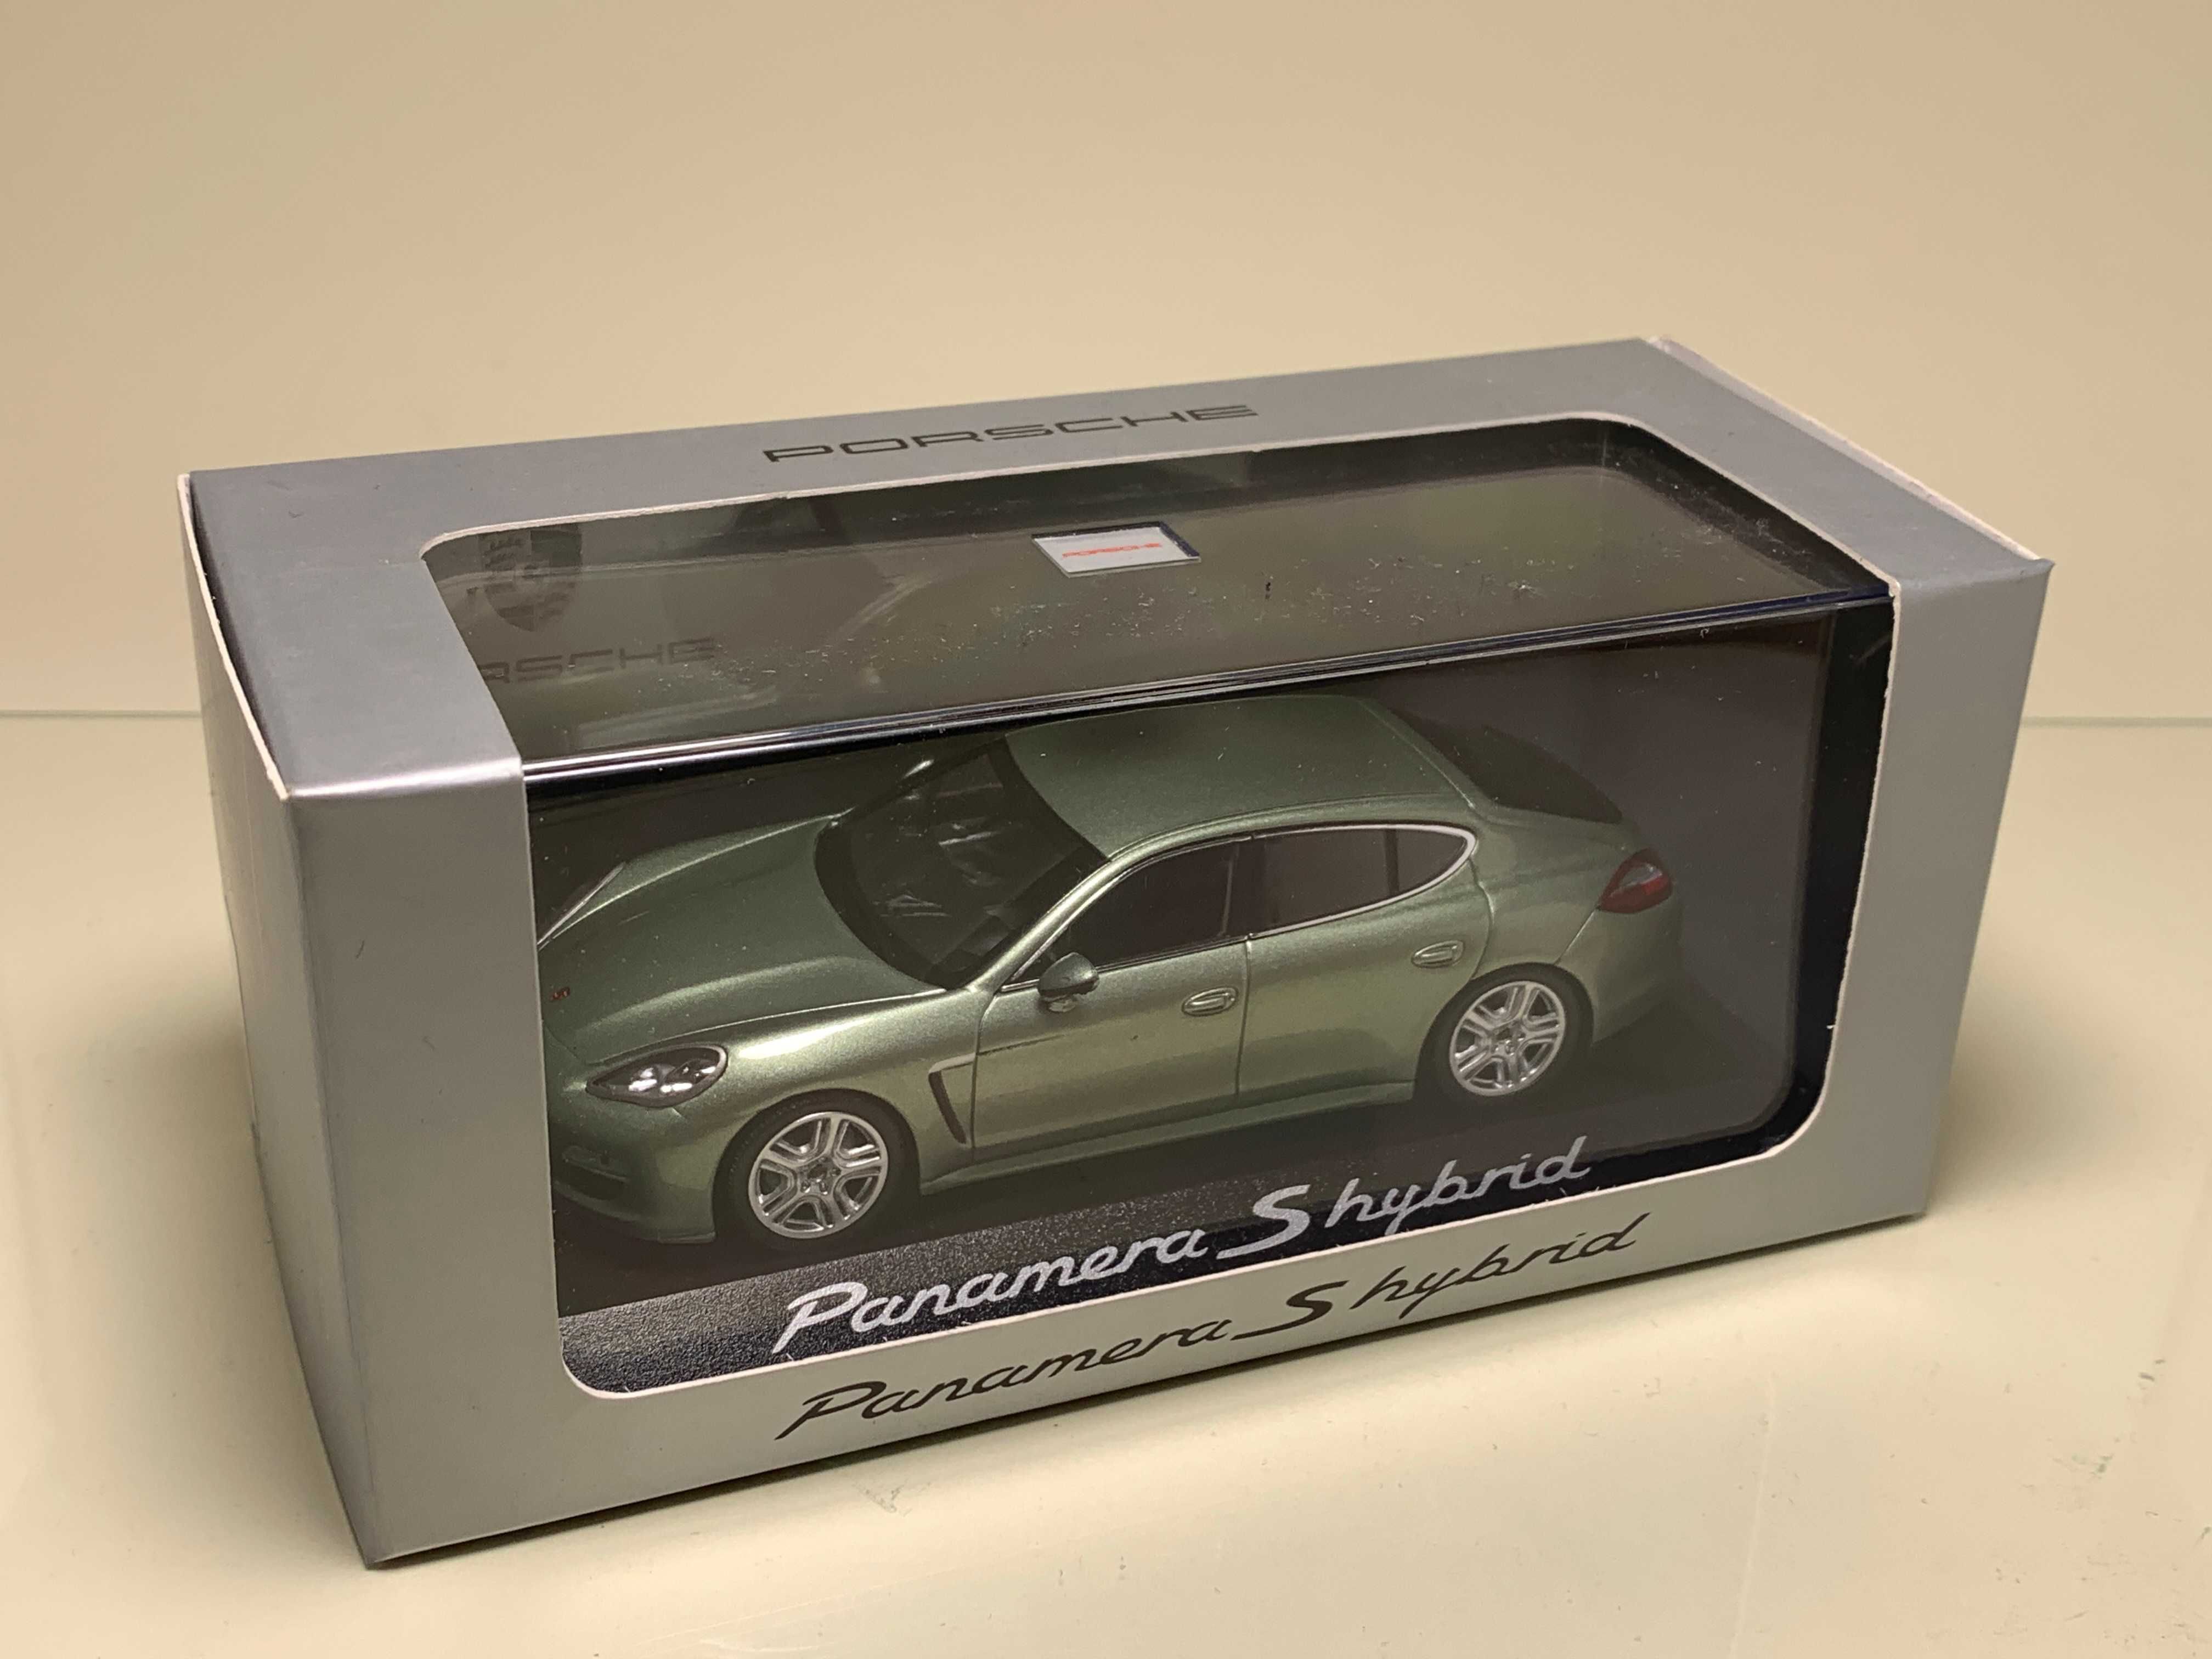 Porsche Panamera S Hybrid 1:43 Model Minichamps